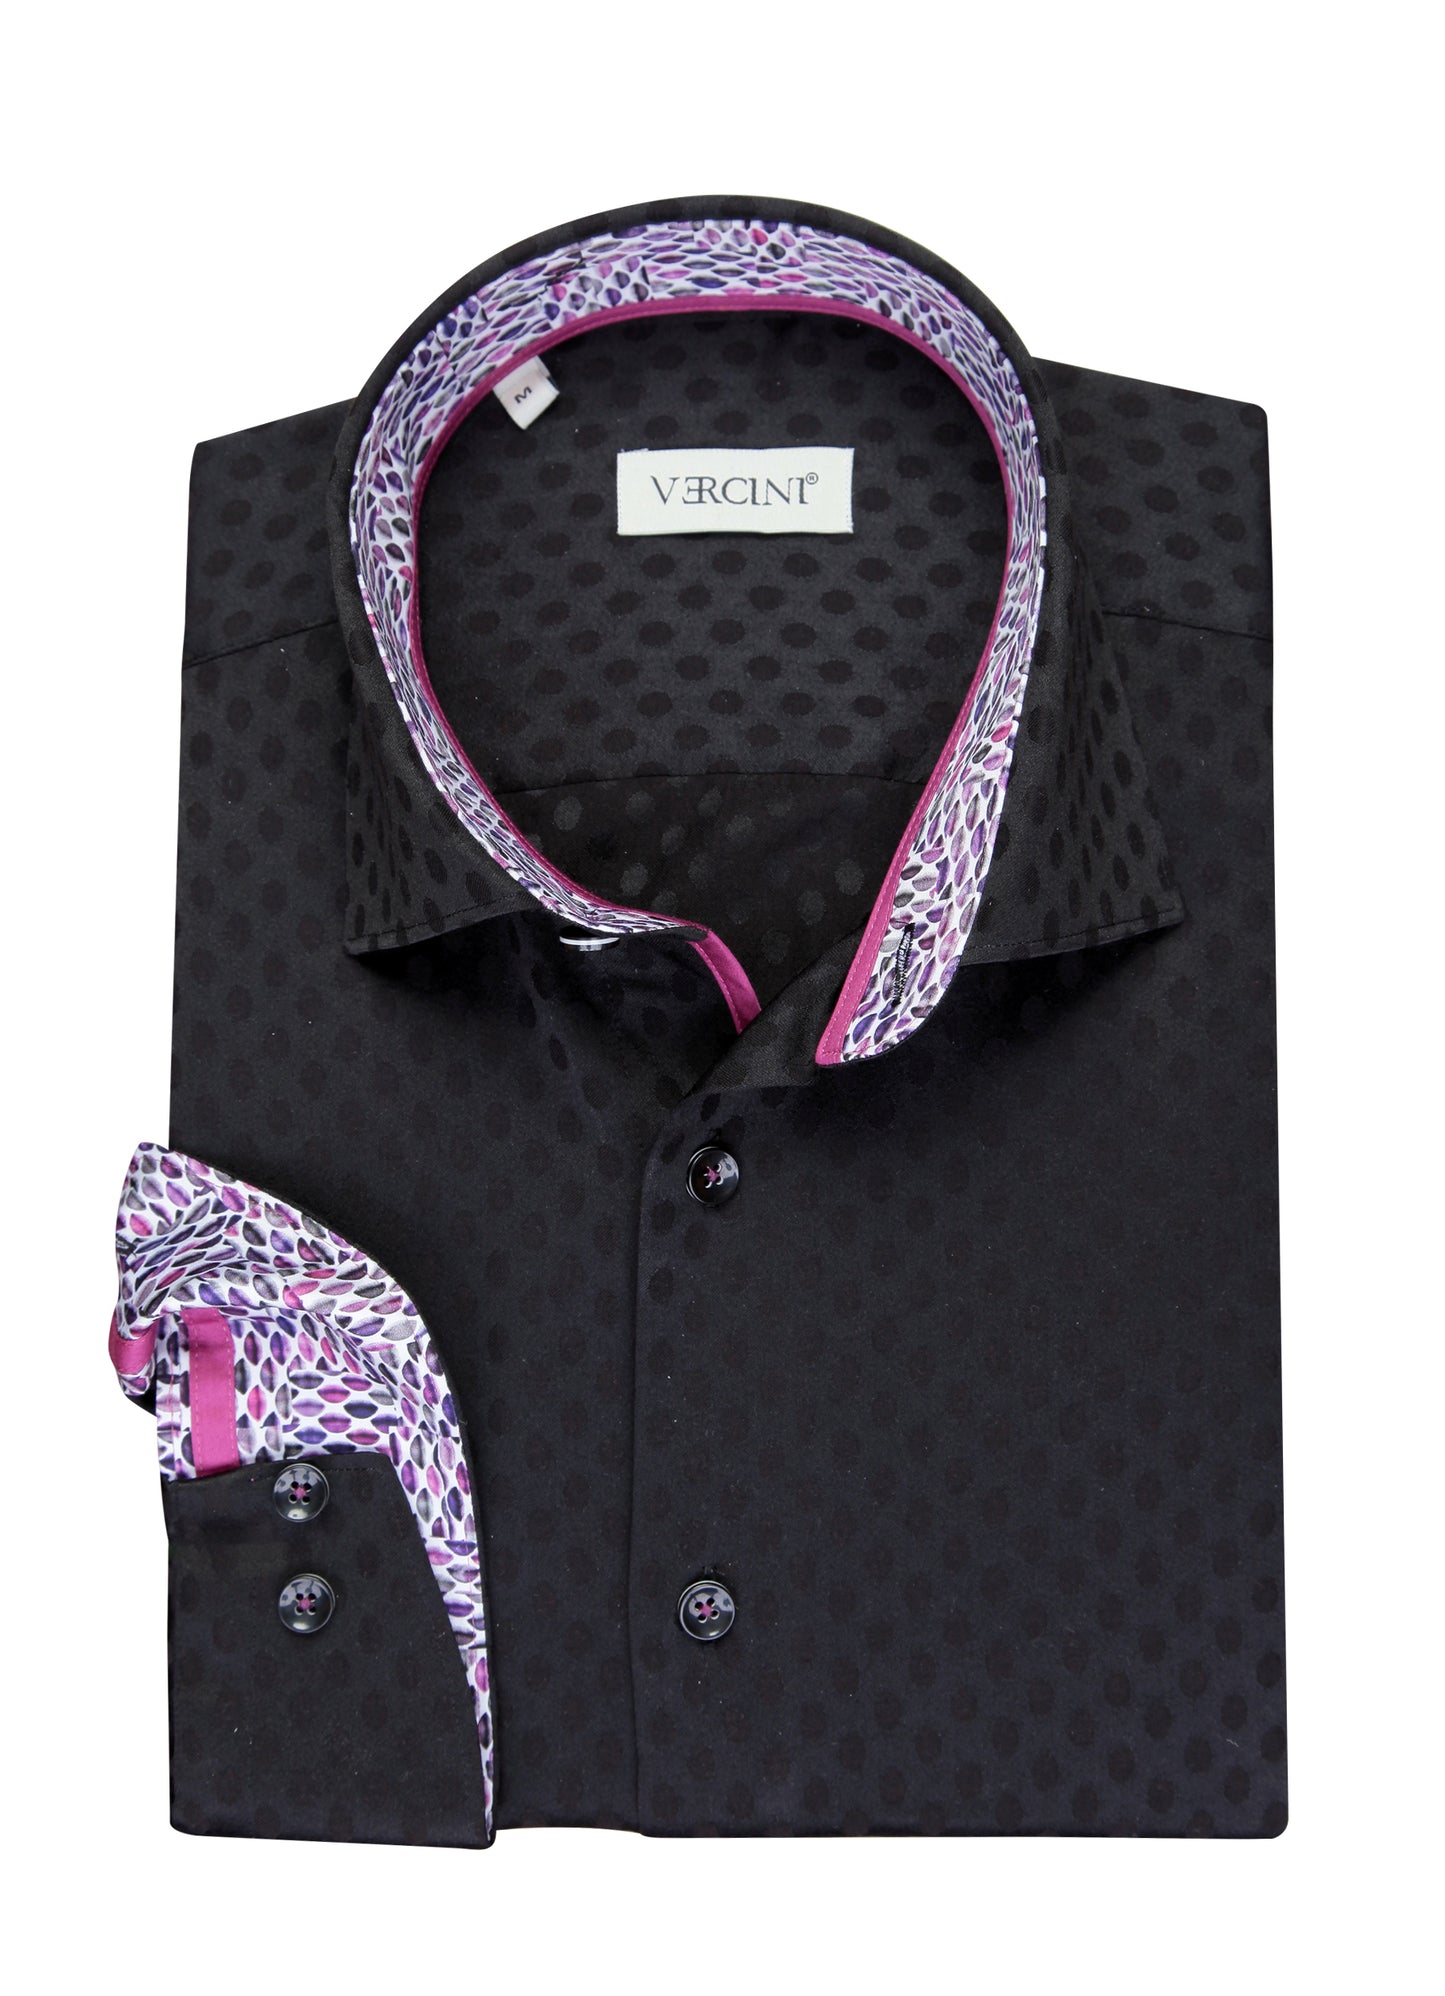 vercini Black radiance Shirt CASUAL SHIRT On Sale 30% Off Vercini